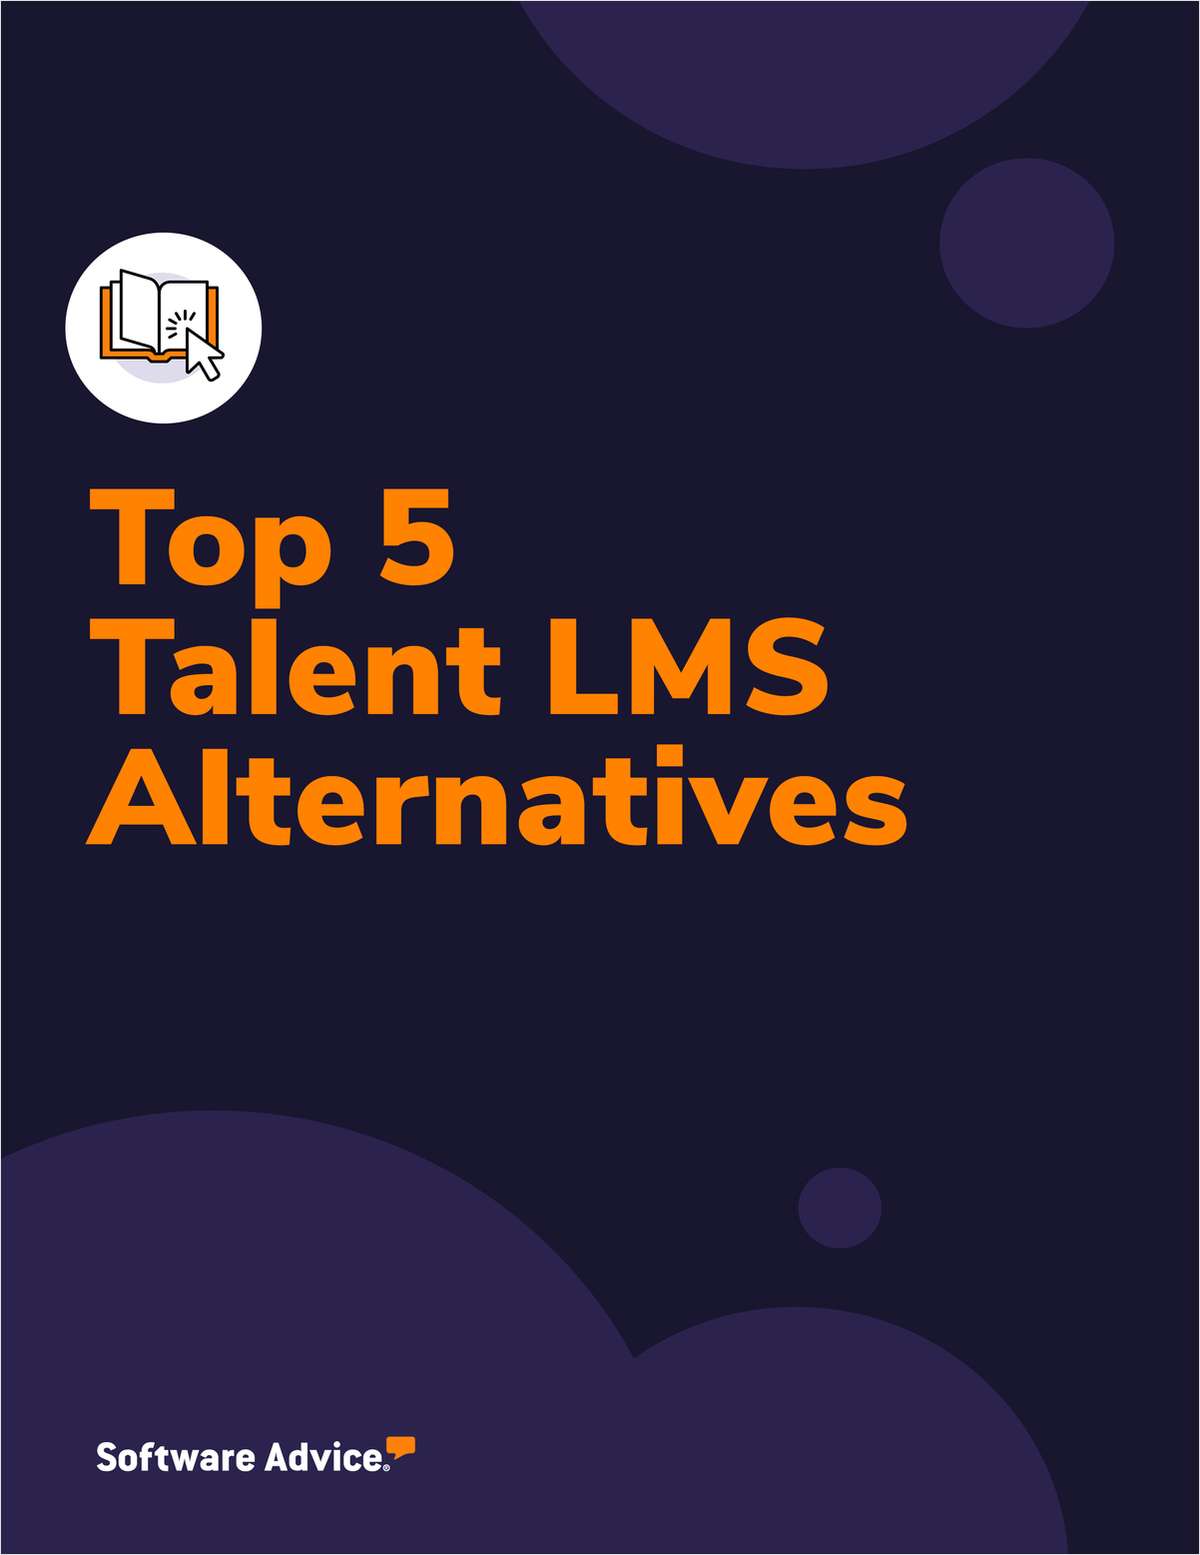 Top 5 Talent LMS Alternatives